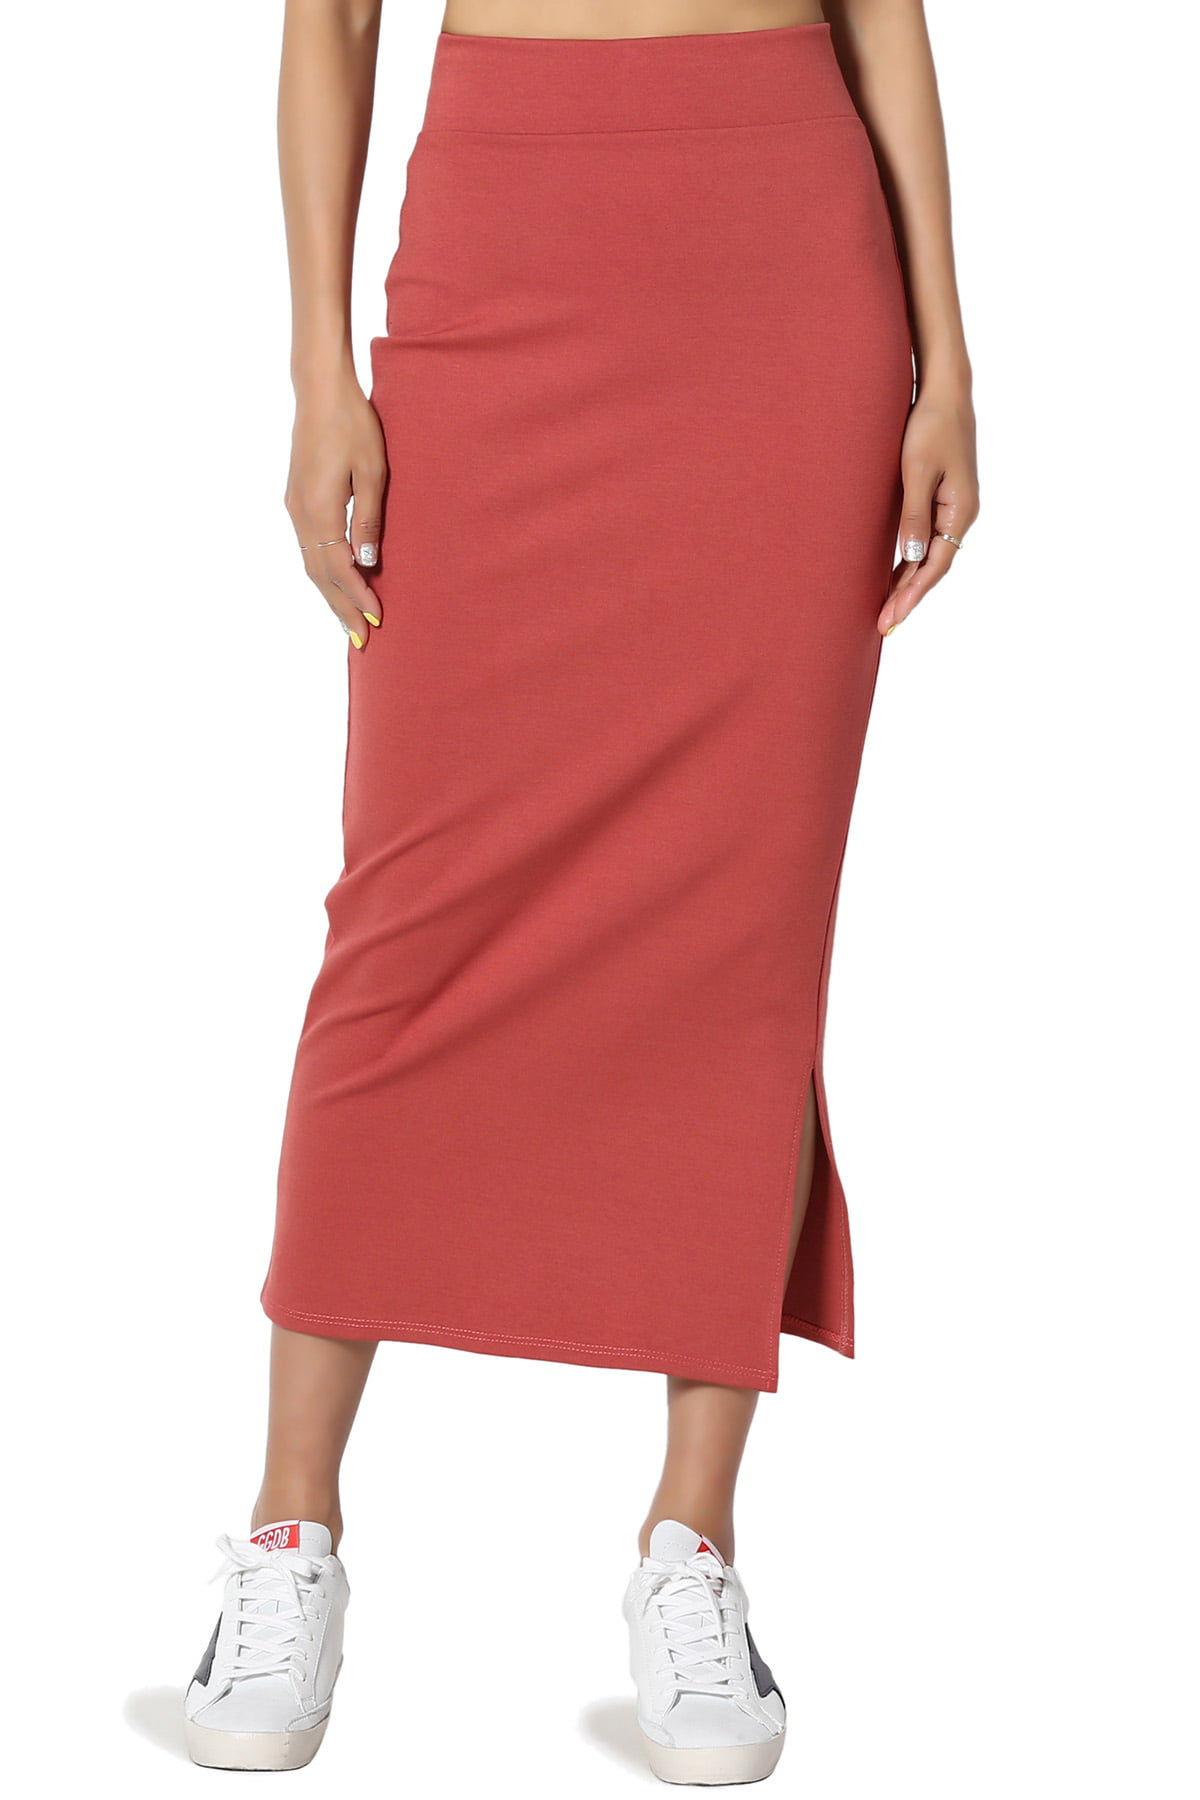 TheMogan Women's S~3X Side Slit Ponte Knit High Waist Mid Calf Long Pencil Skirt - Walmart.com